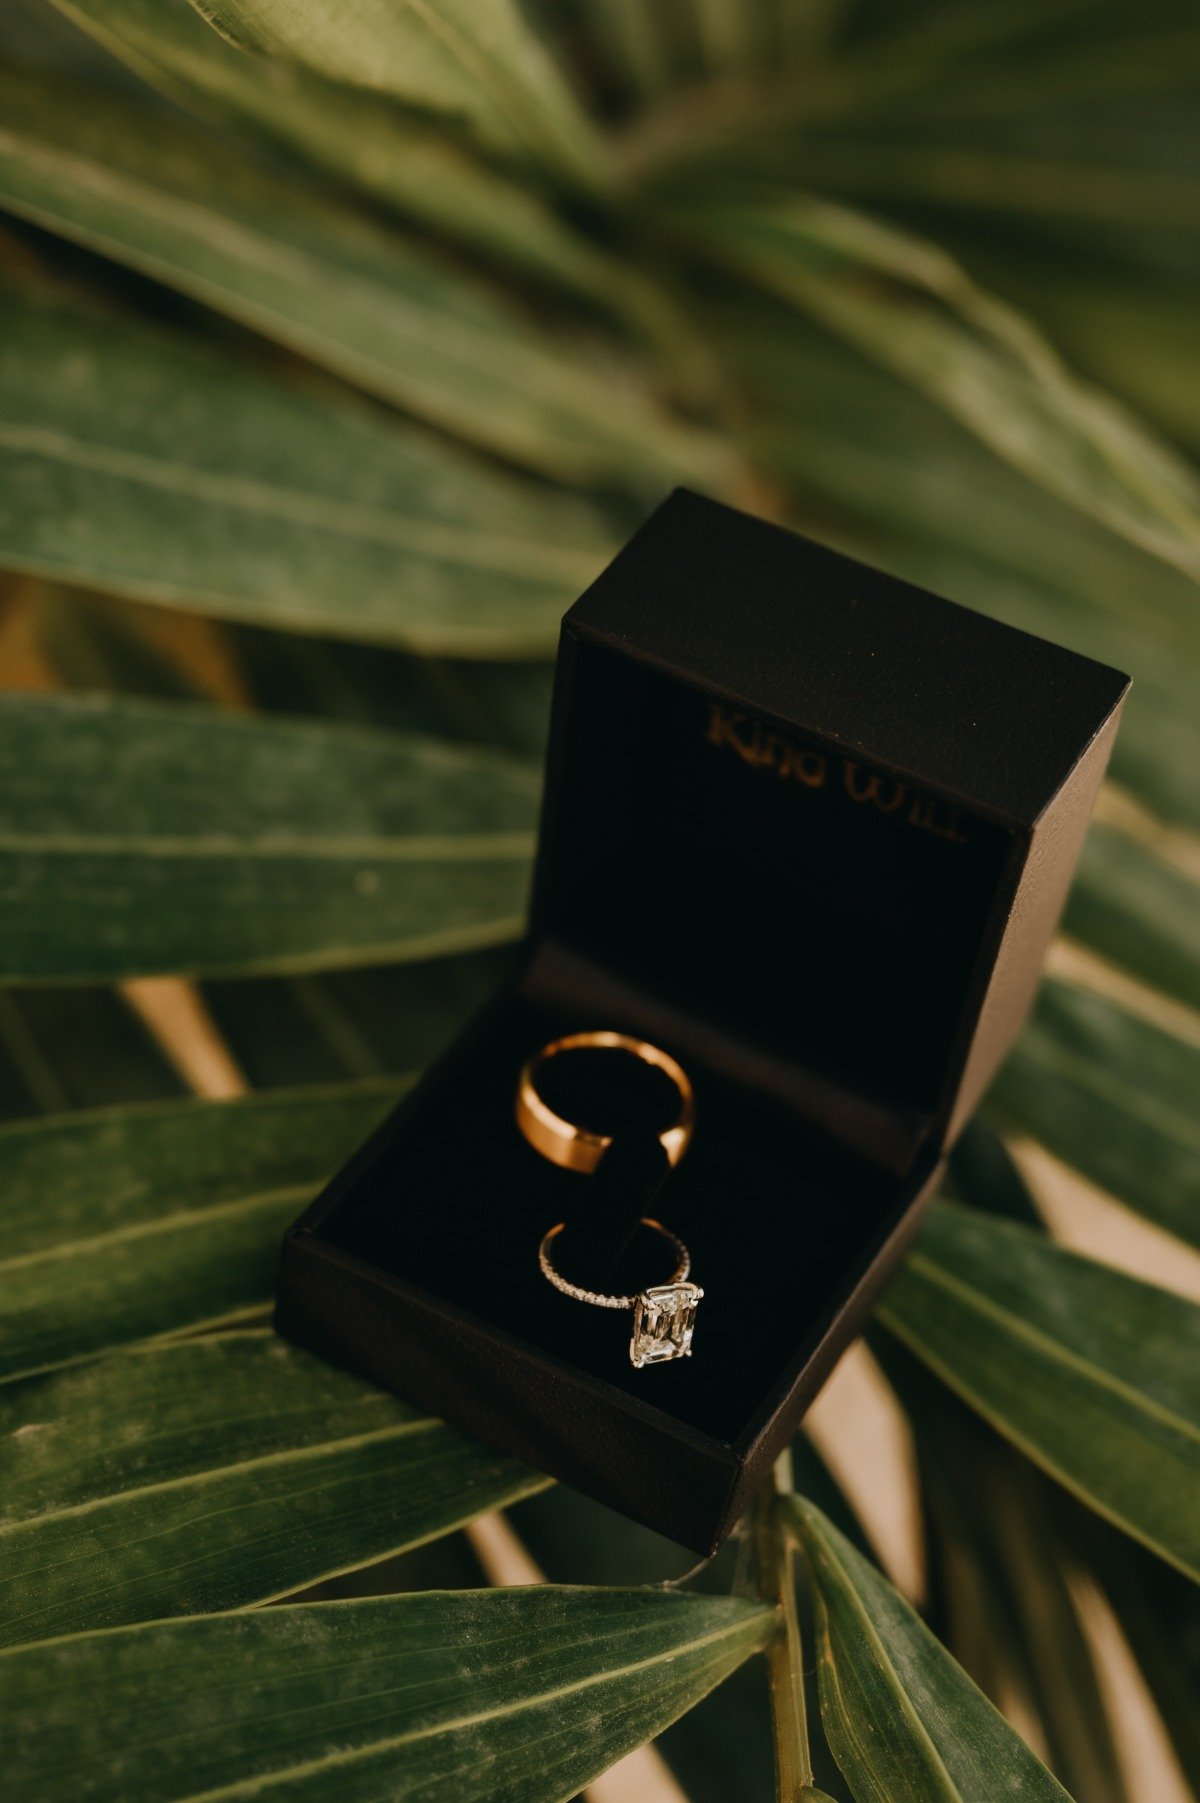 Jungle background wedding rings